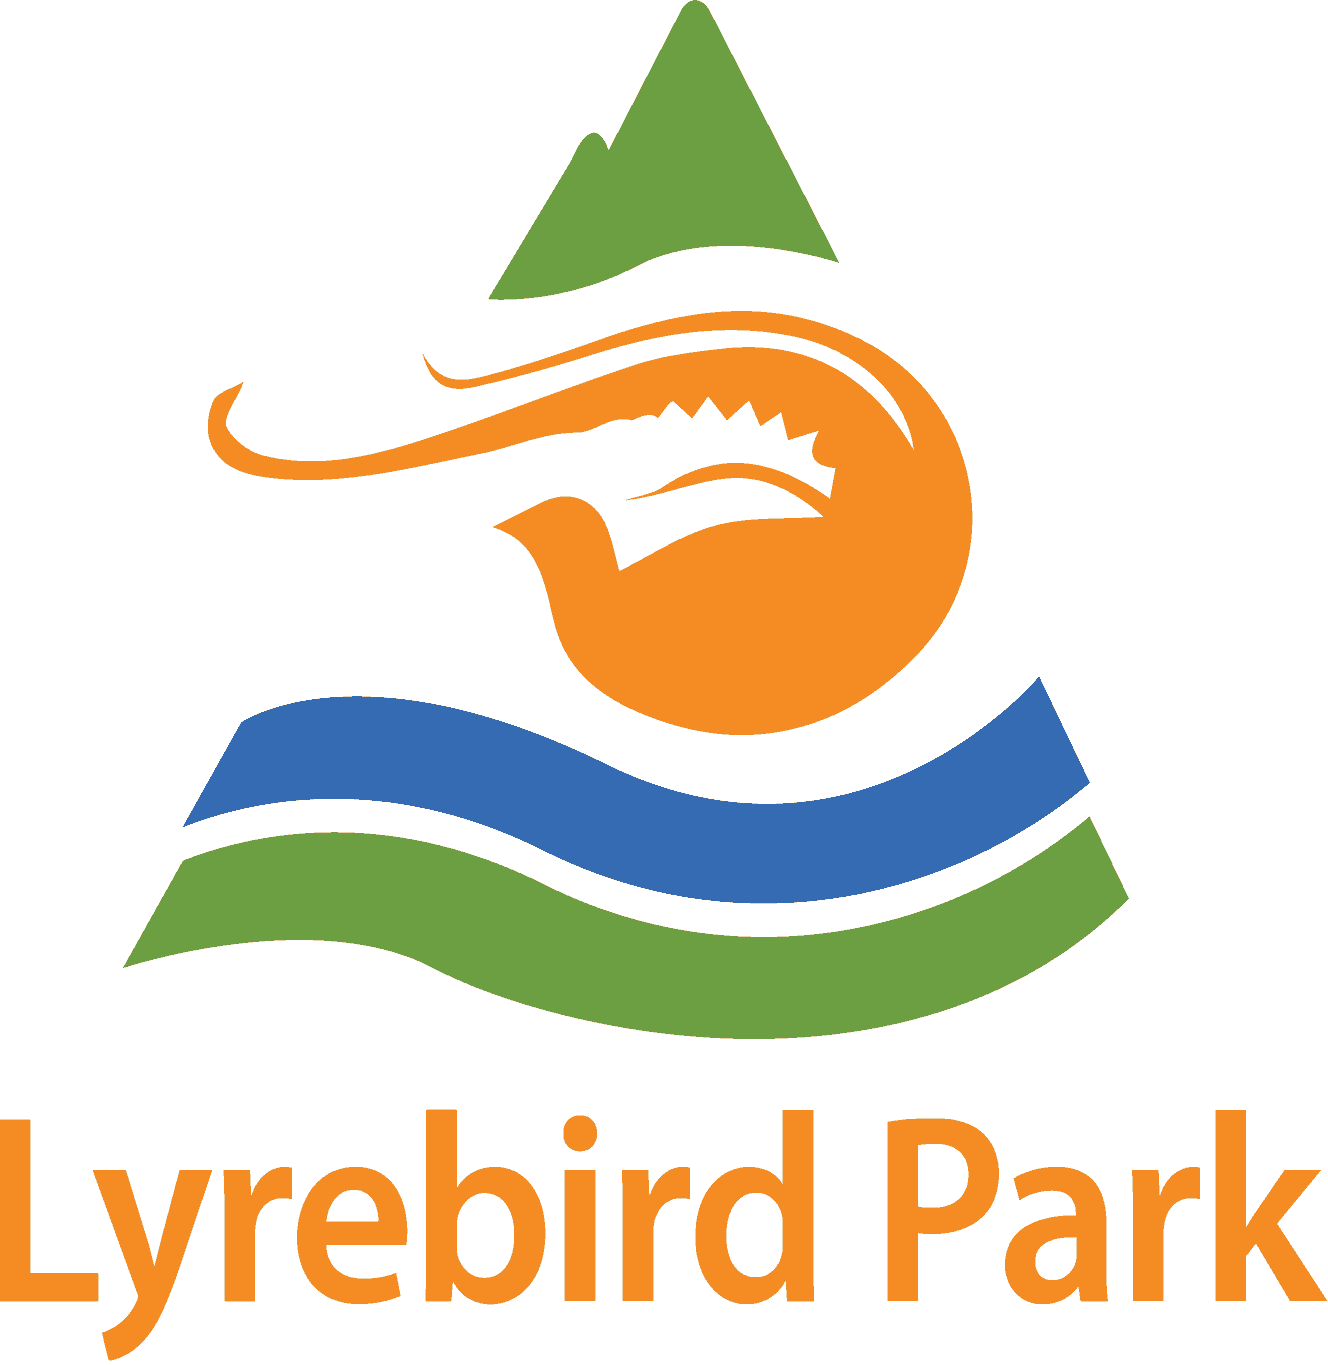 Lyrebird Park